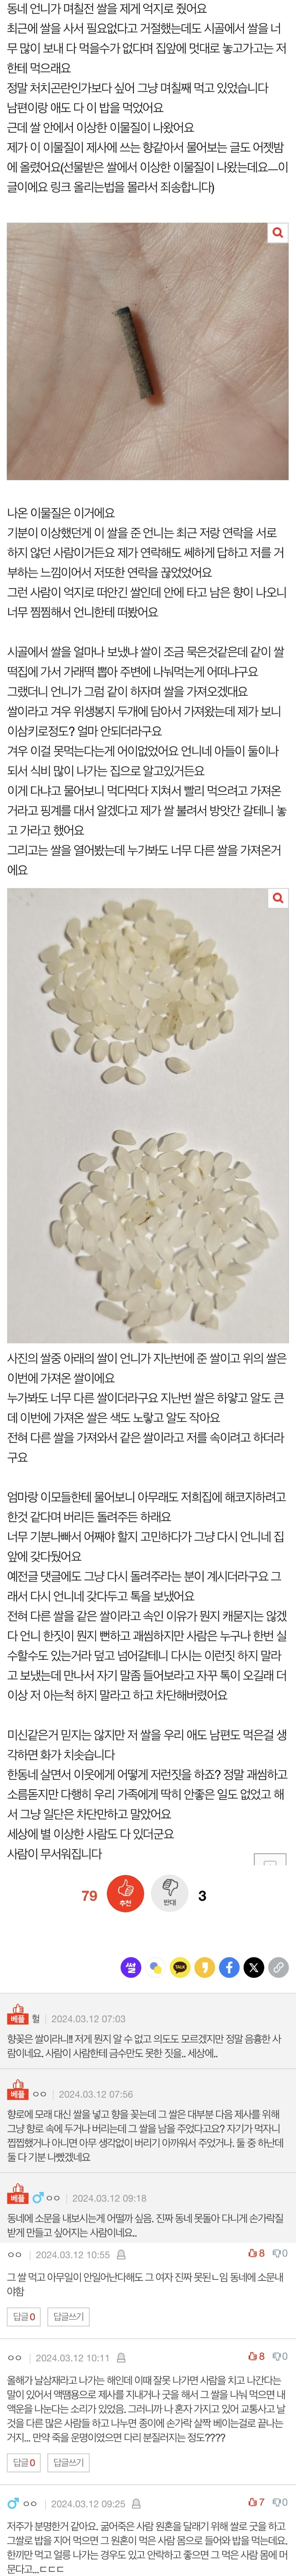 nokbeon.net-강제로 제게 준 쌀을 돌려줬는데 너무 소름돋아요-1번 이미지